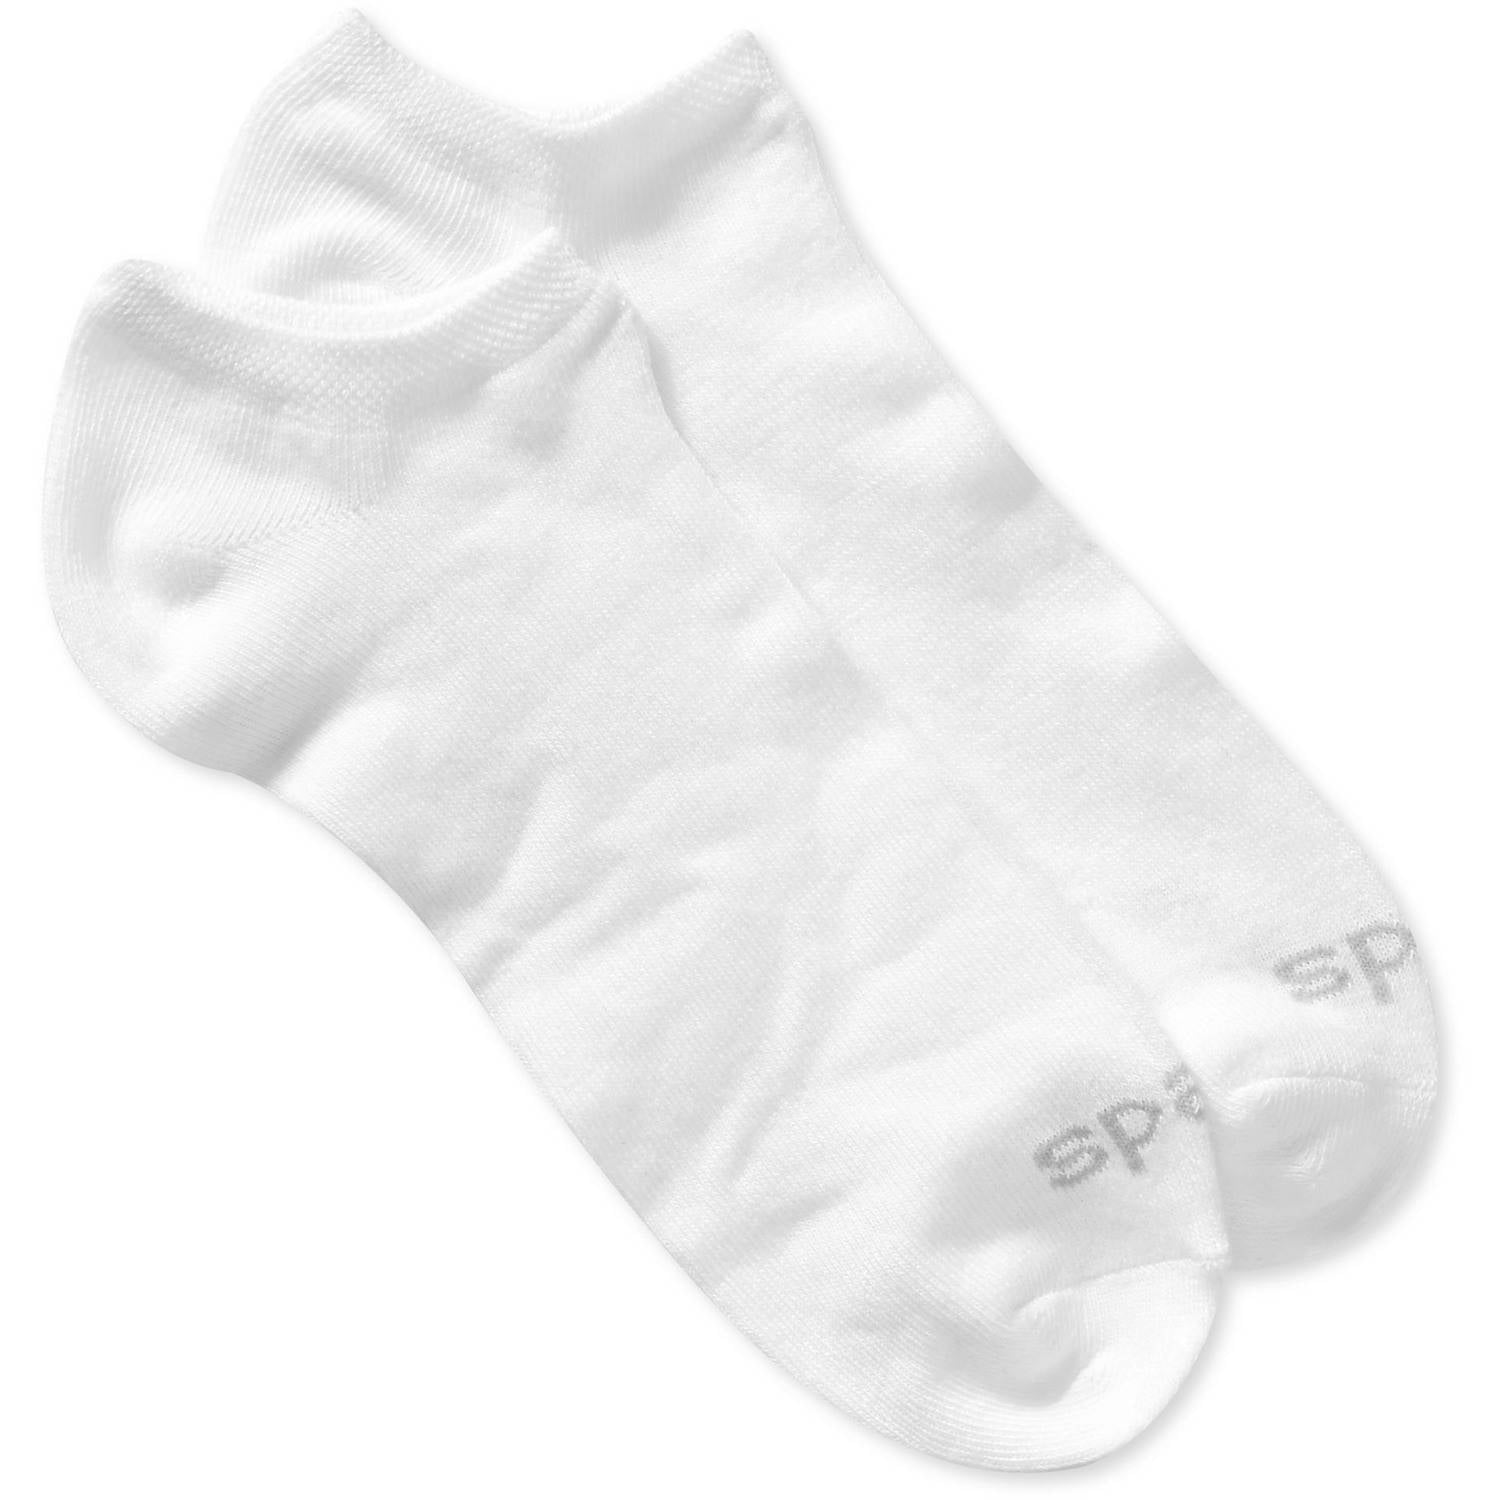 peds footie socks for women